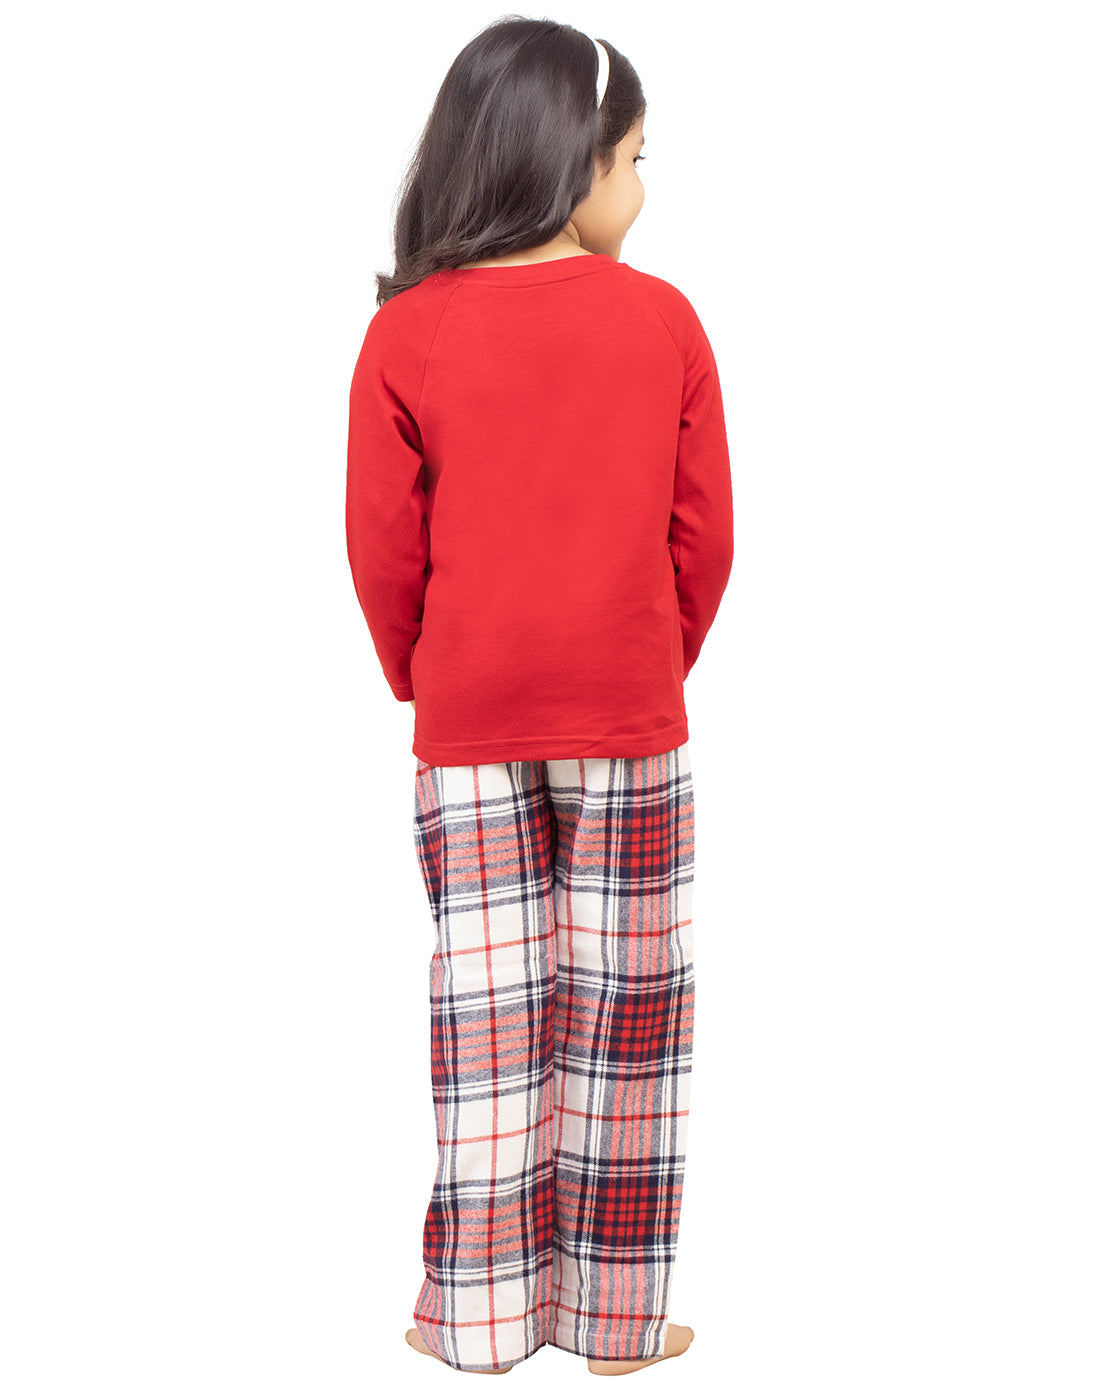 Pyjama Set for Girls-Red Checked